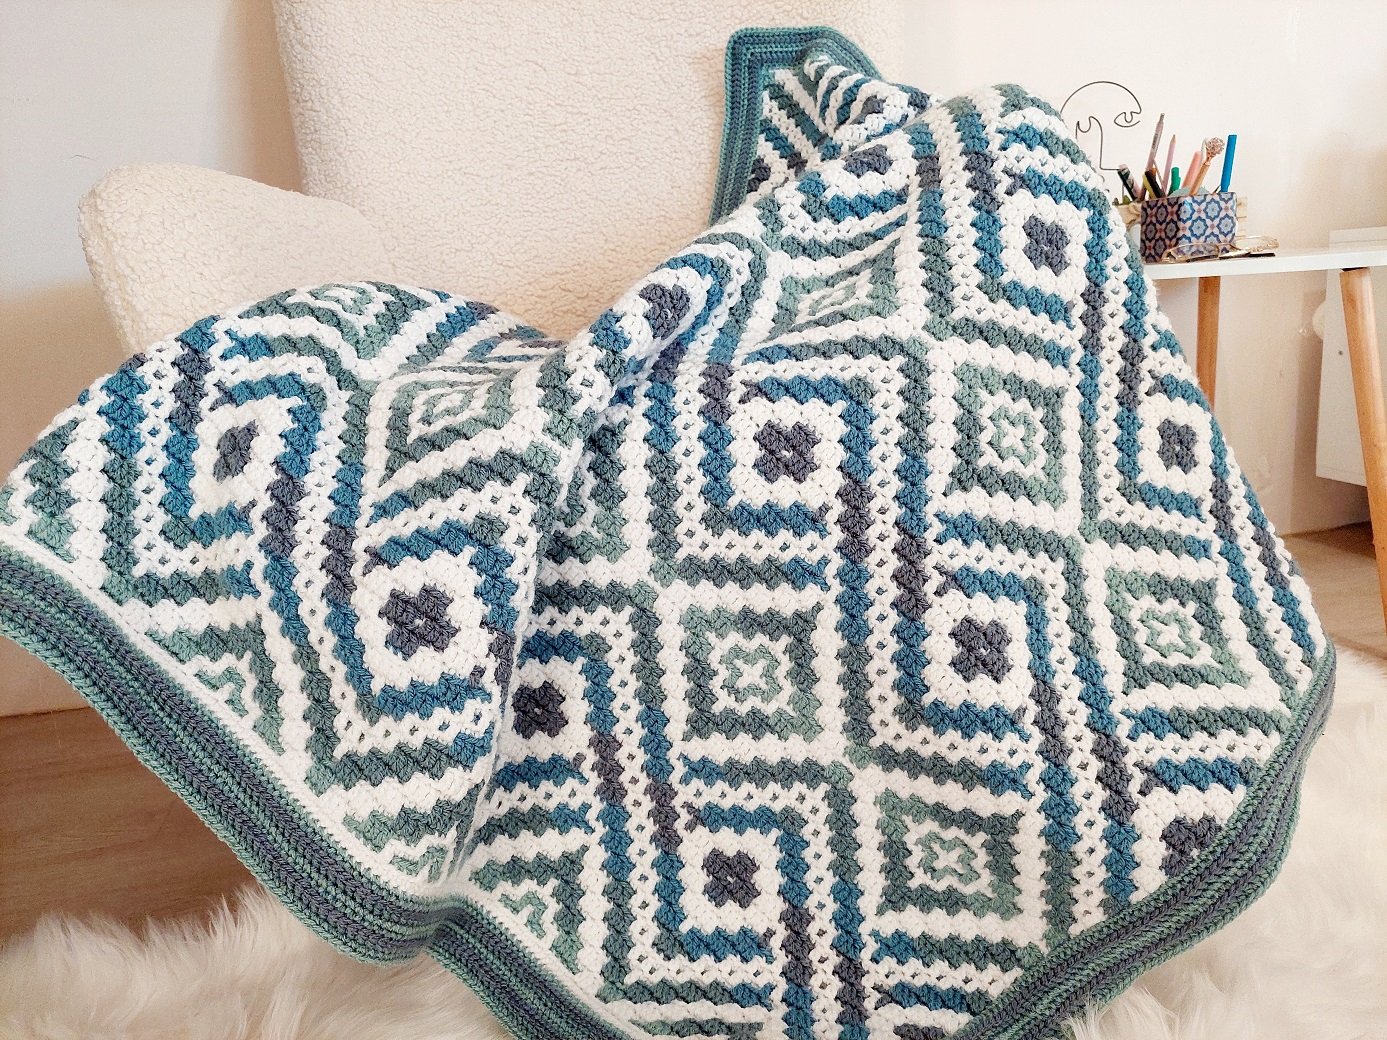 Joys of Winter. Overlay mosaic crochet pattern